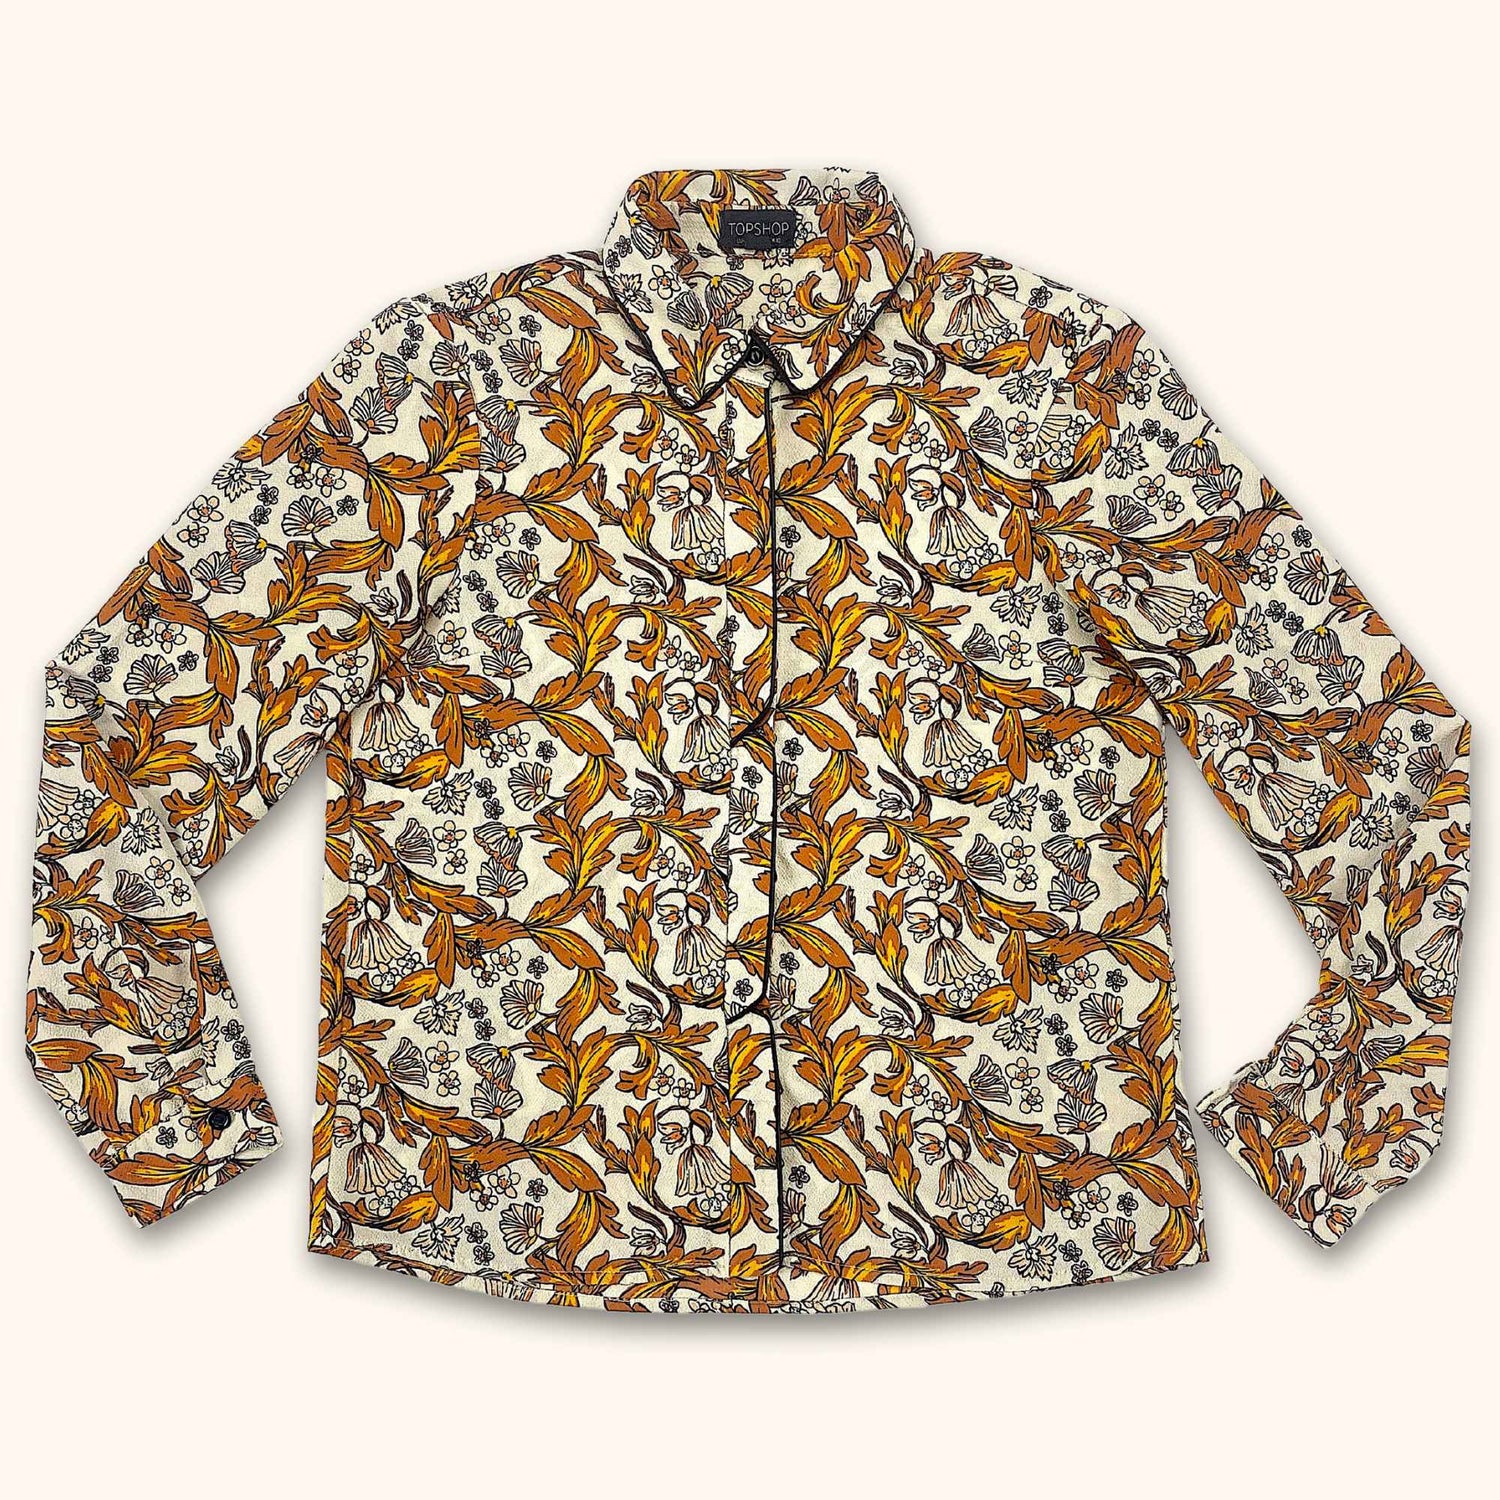 Topshop Oriental Orange Button Up Shirt - Size 10 - Topshop - Shirts